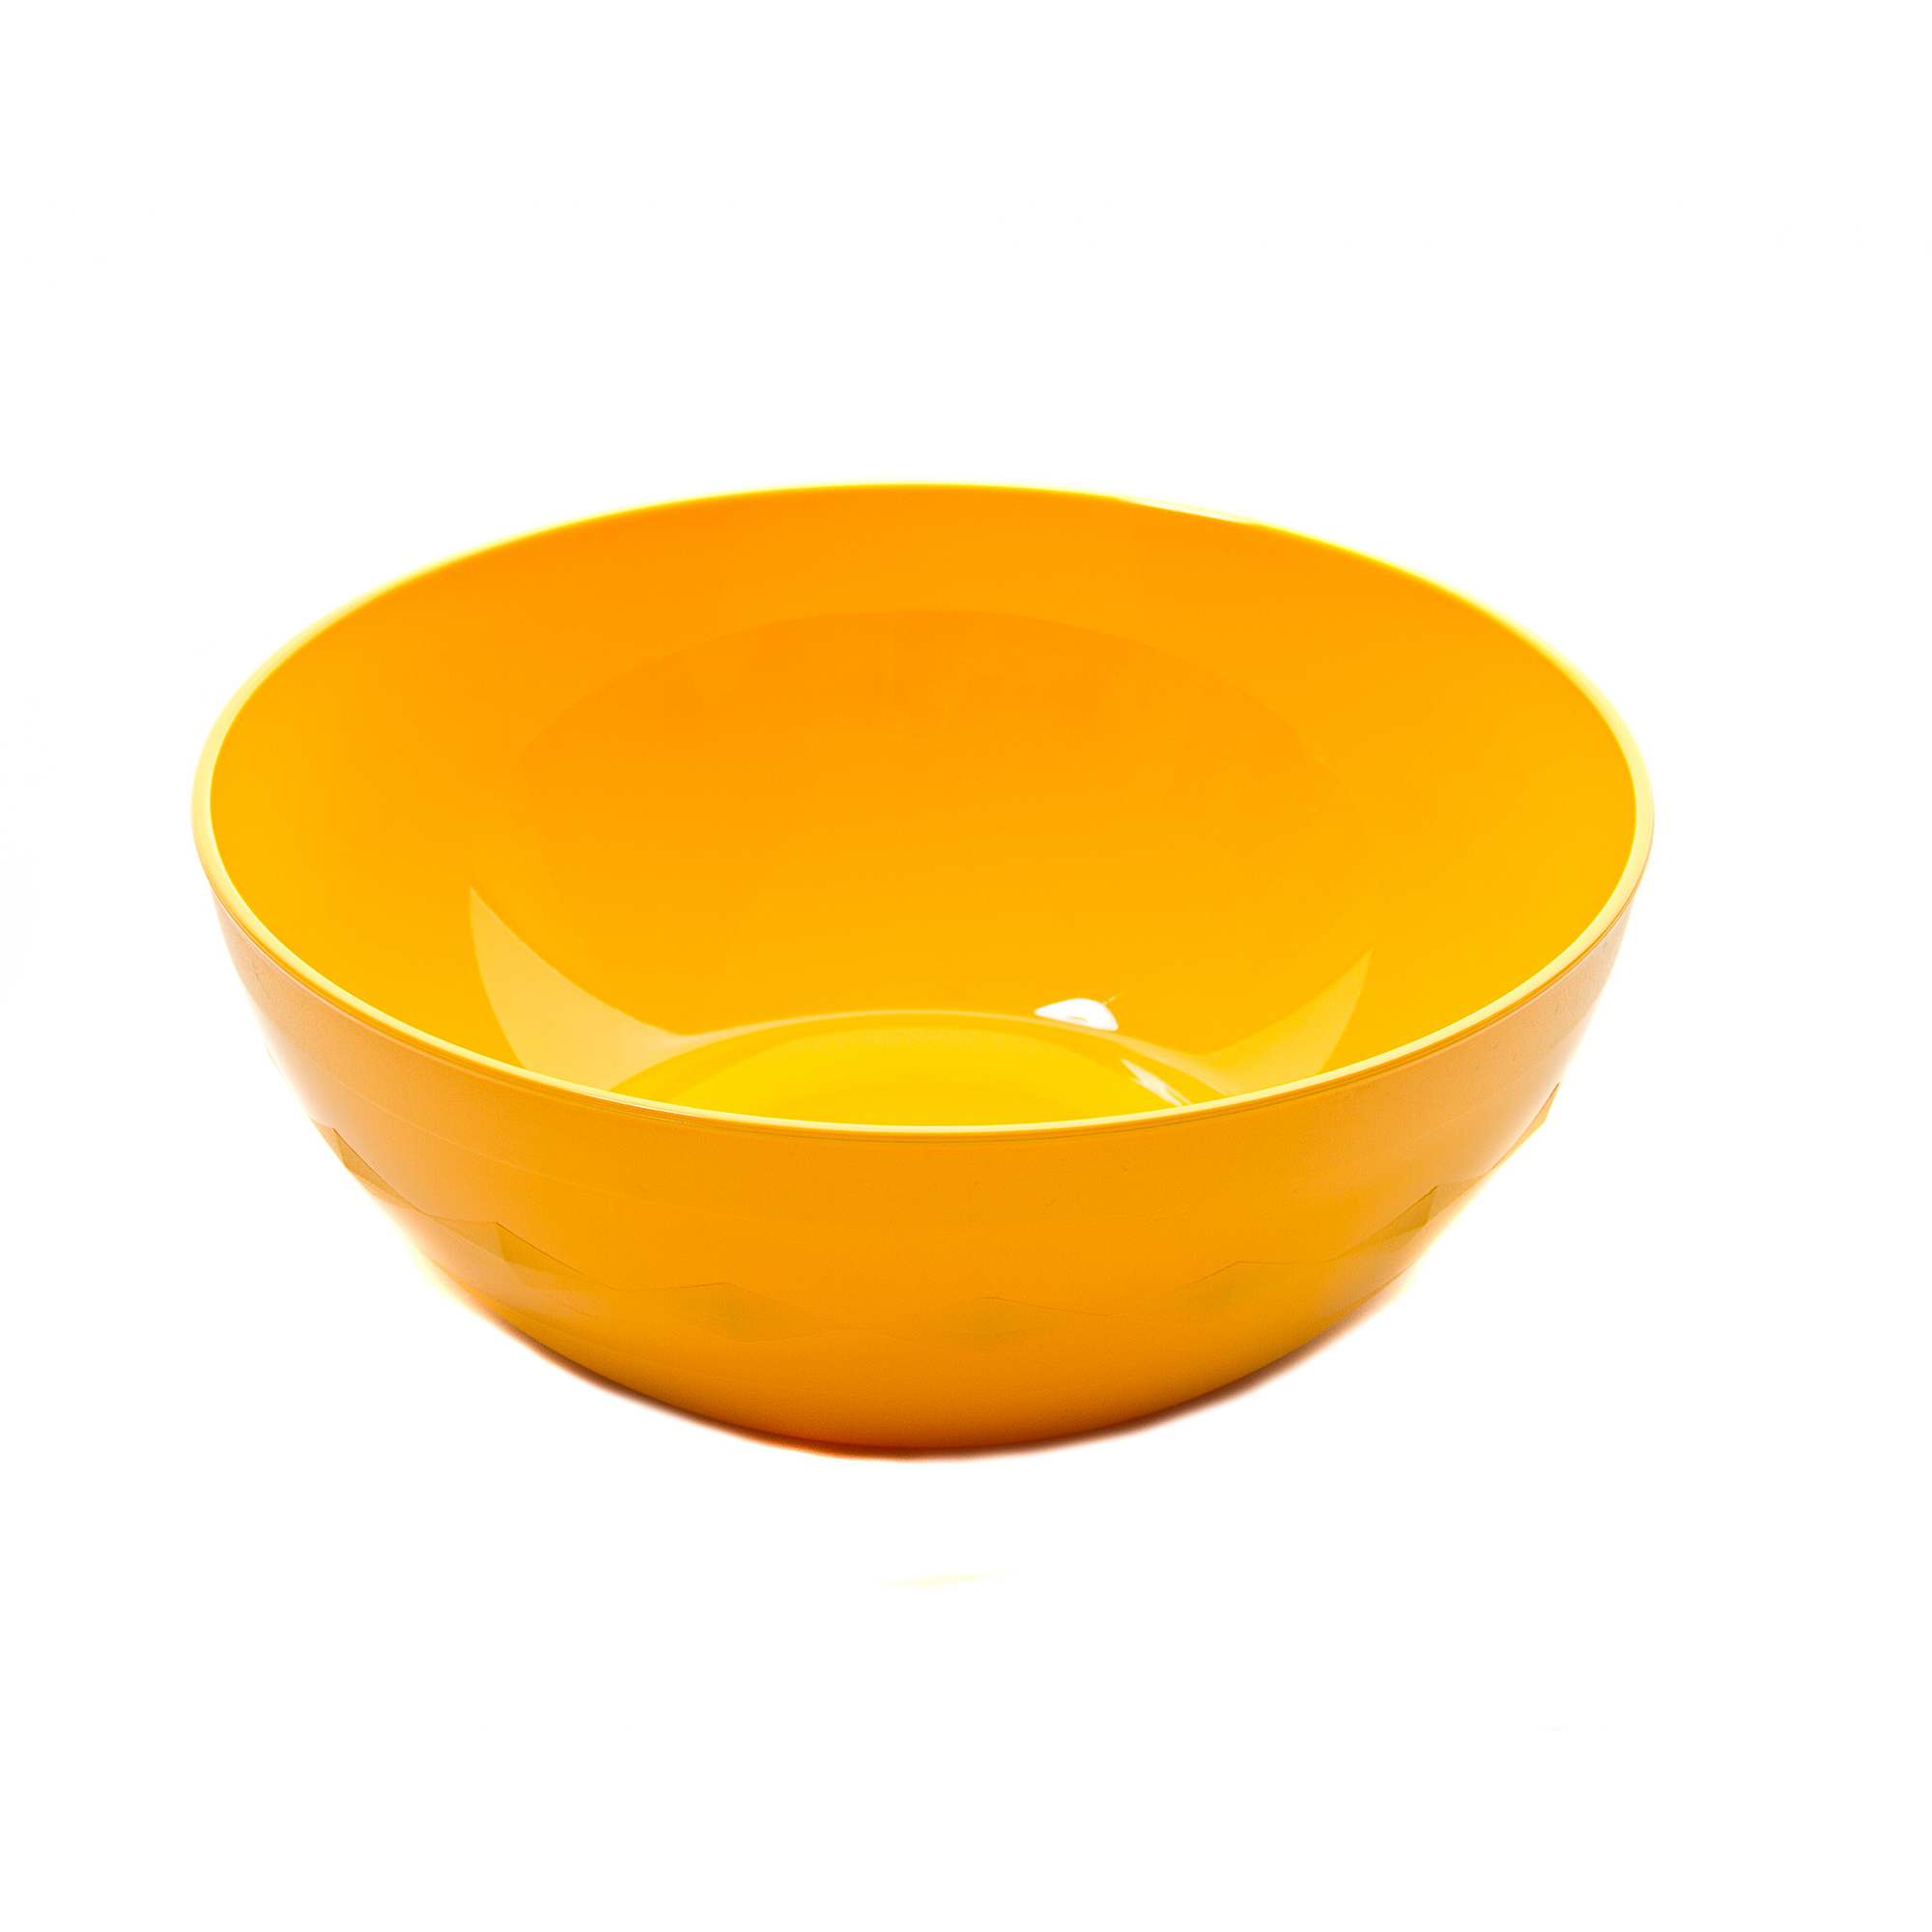 Serving Bowl - Yellow